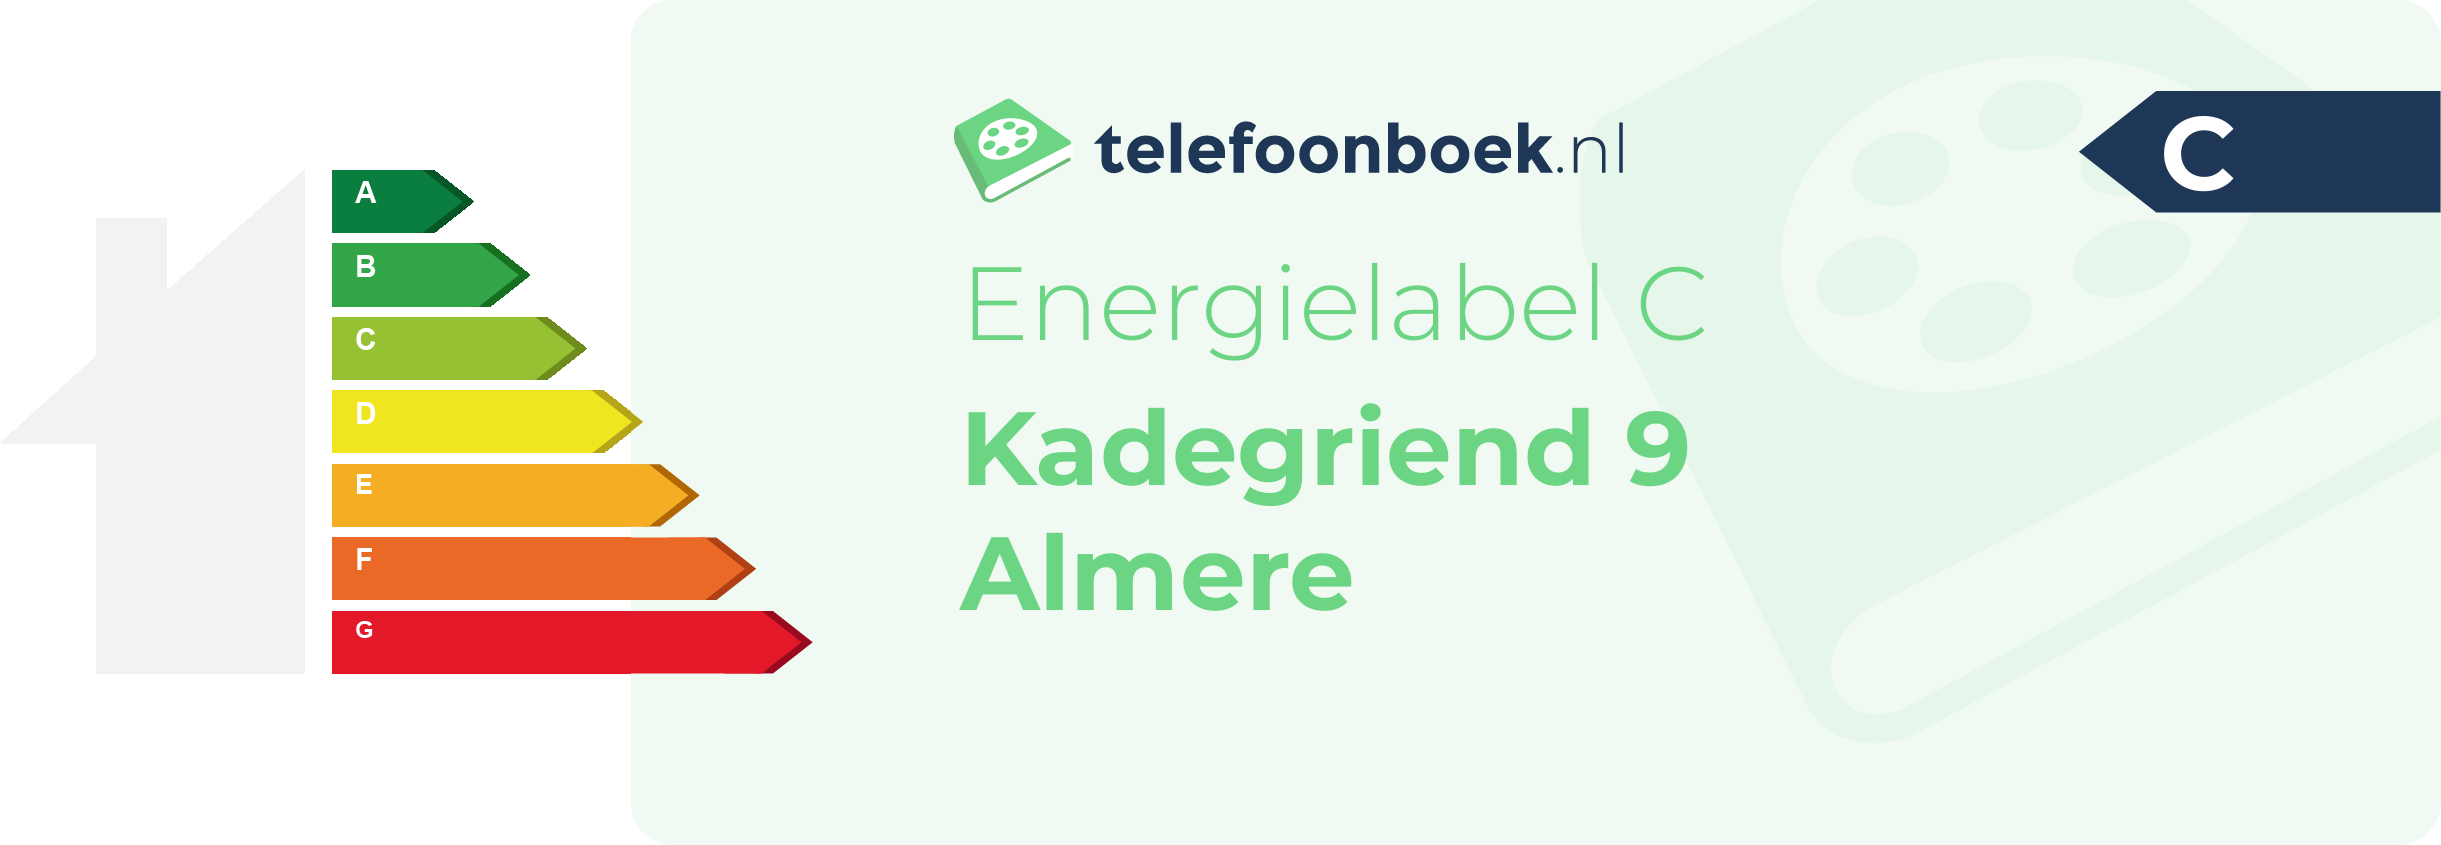 Energielabel Kadegriend 9 Almere